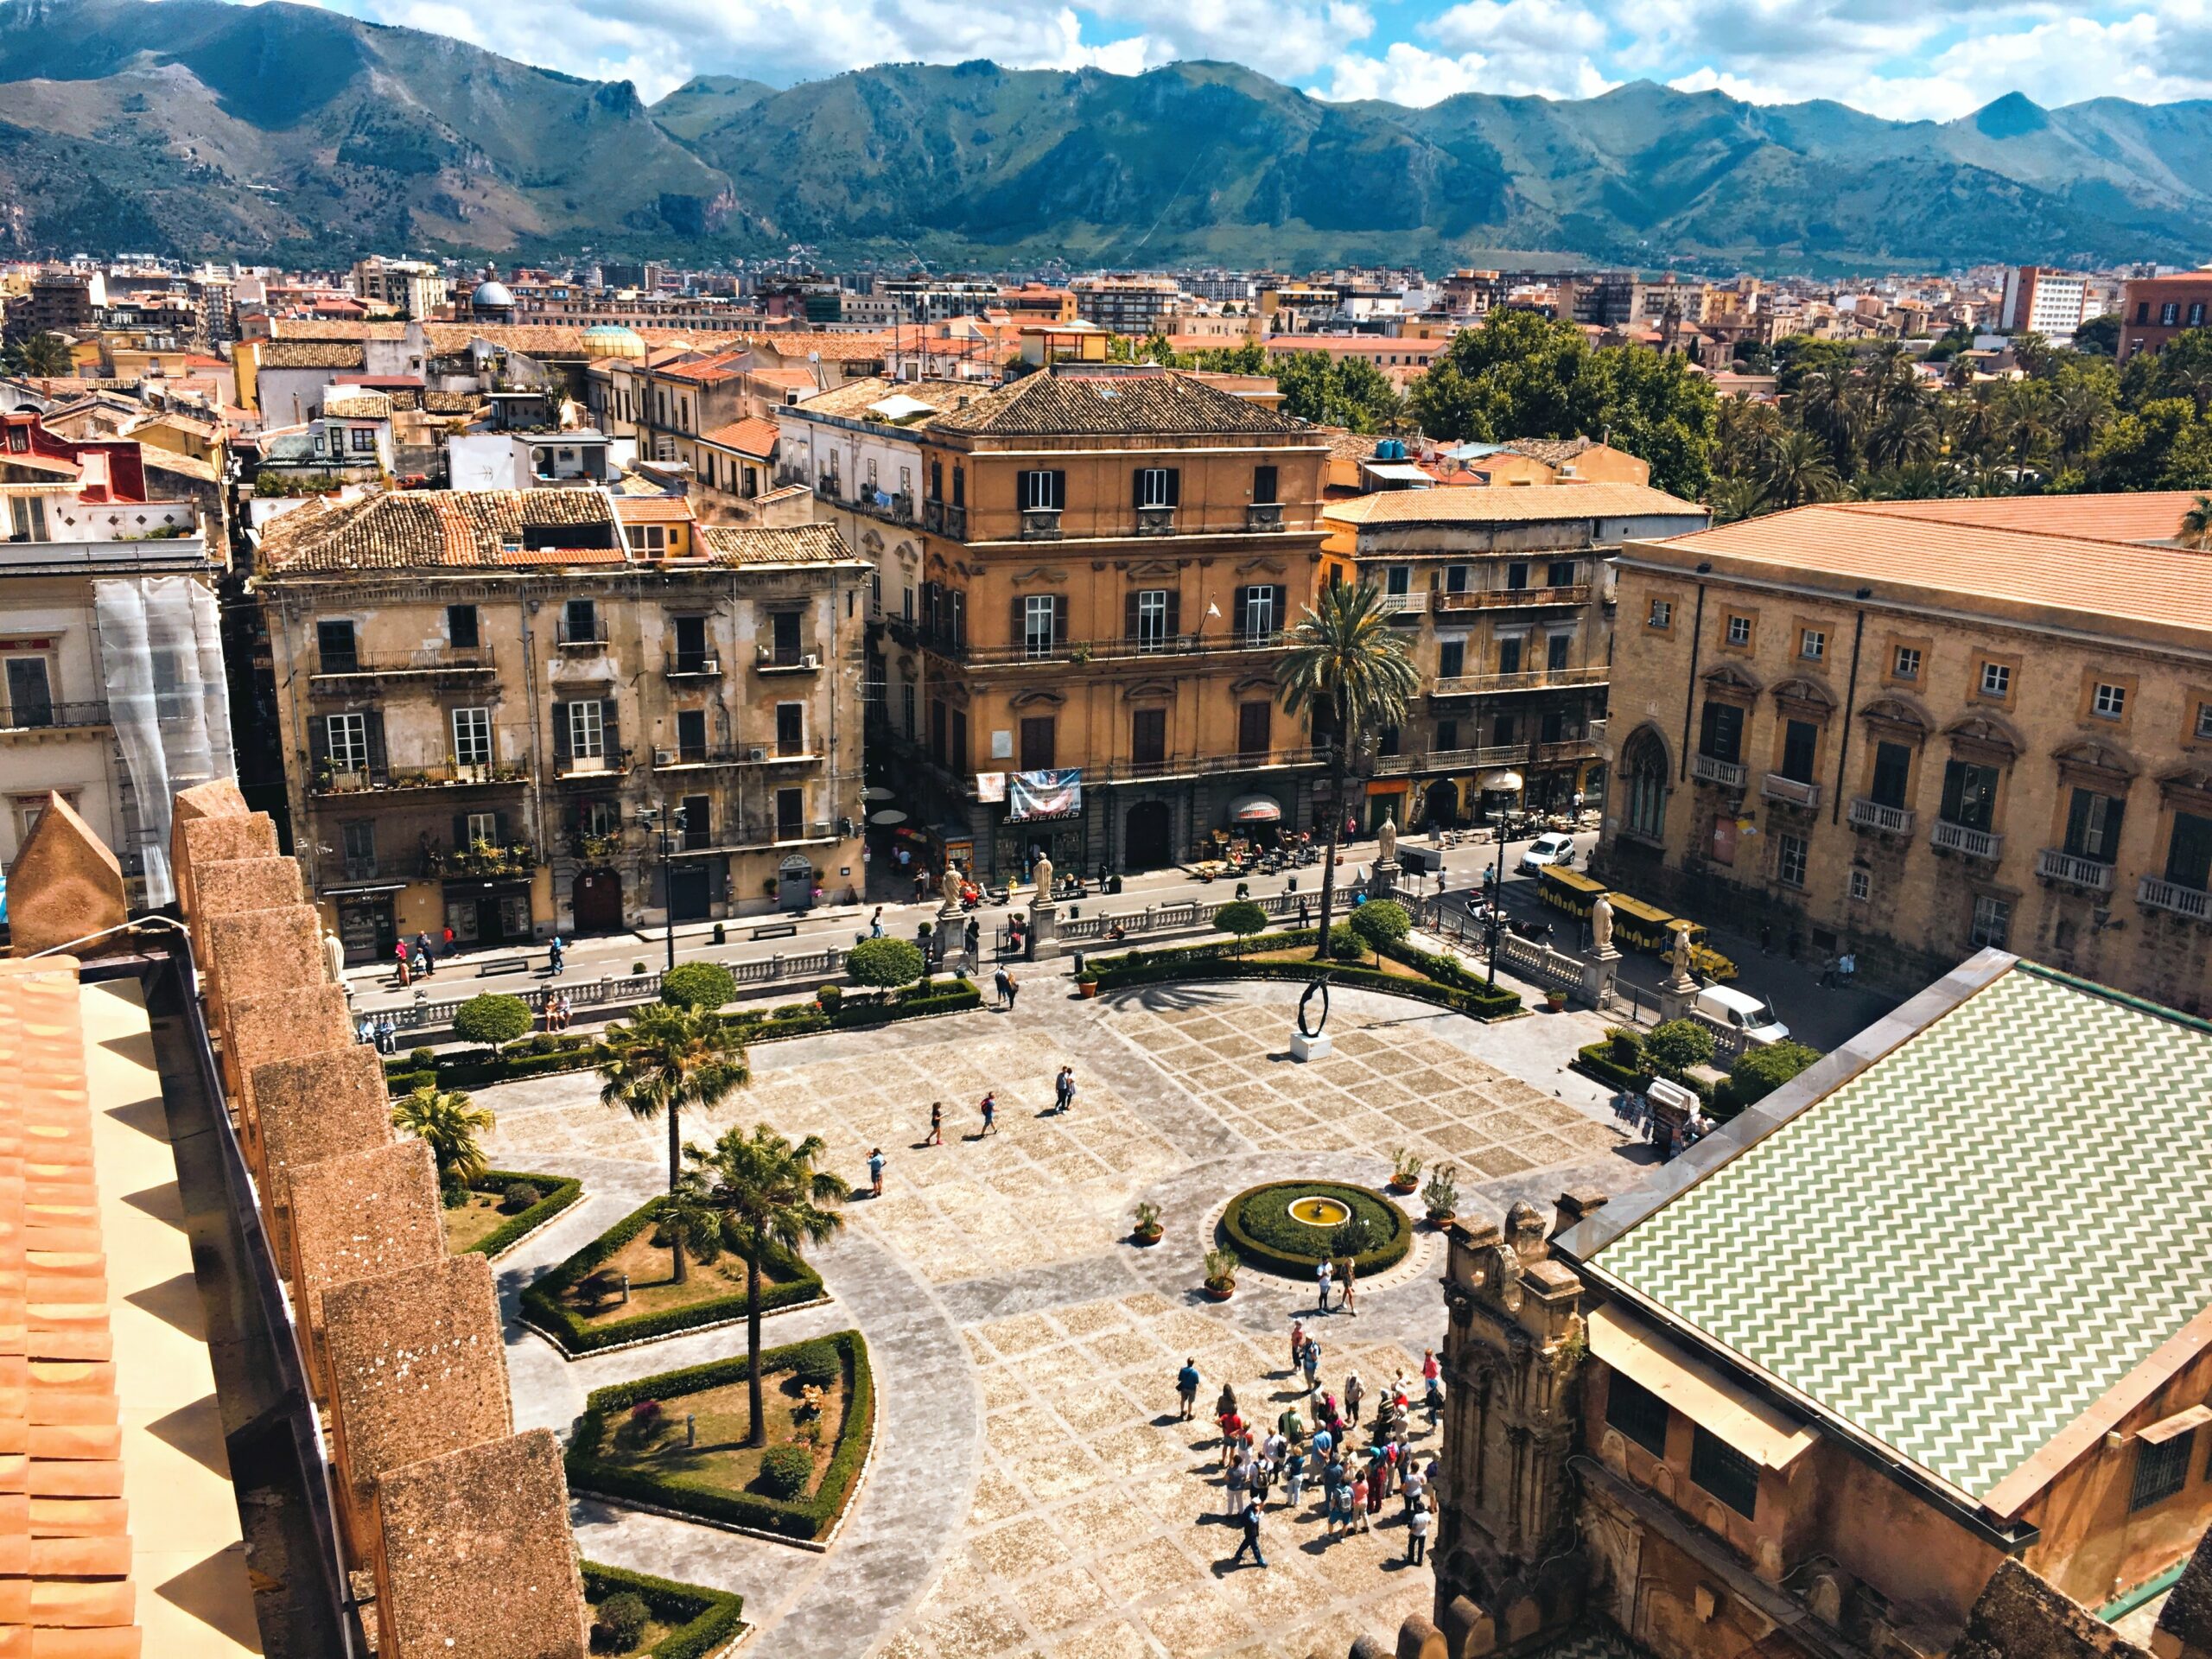 City center of Palermo, Italy